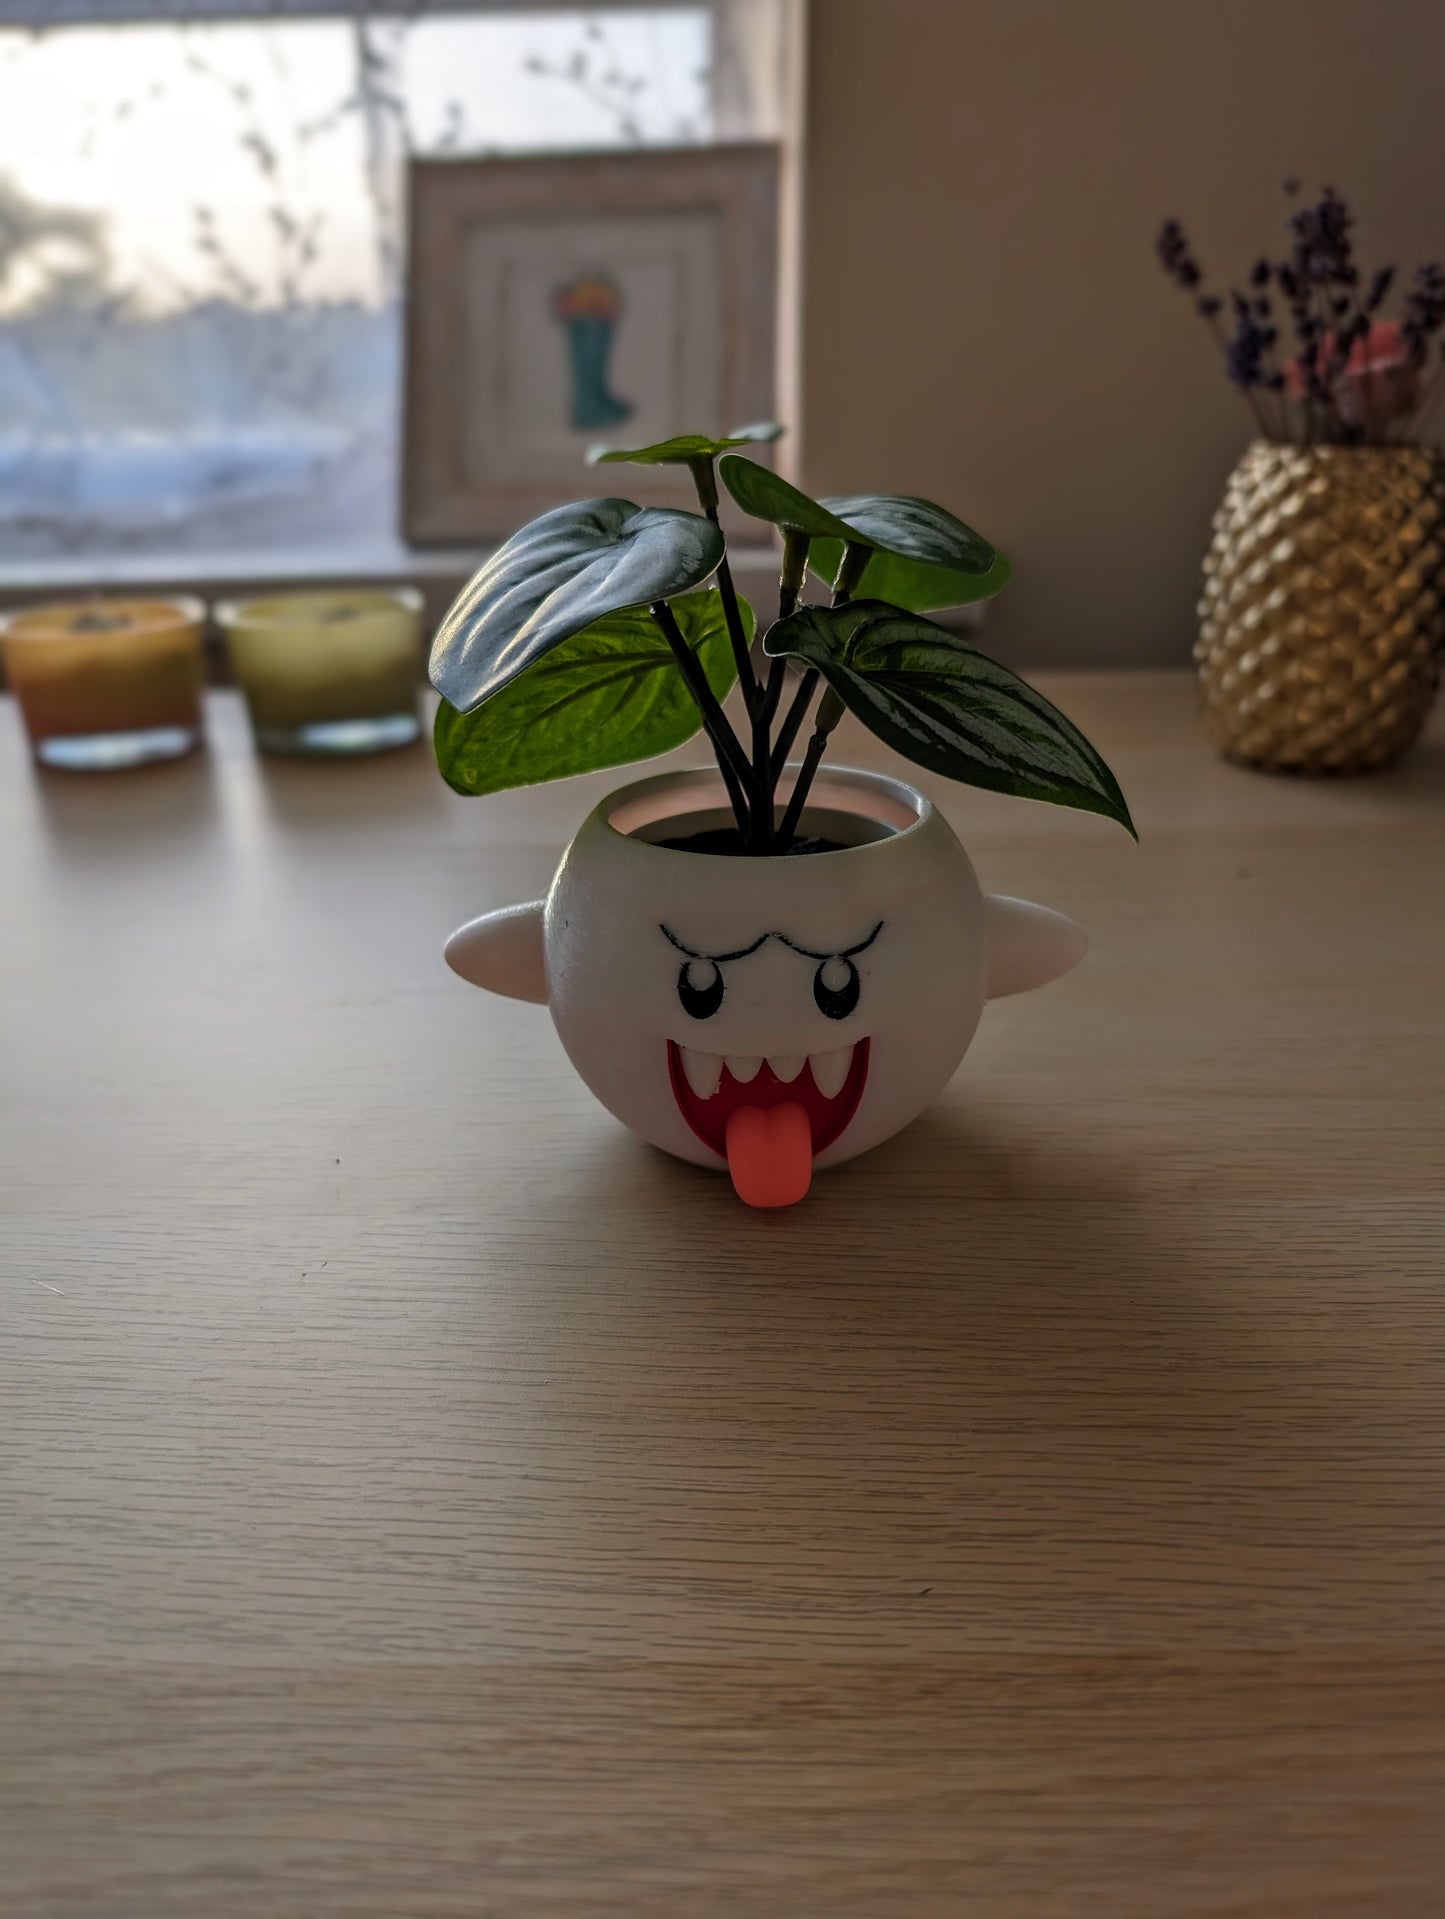 Small Mario Boo planter on the desk